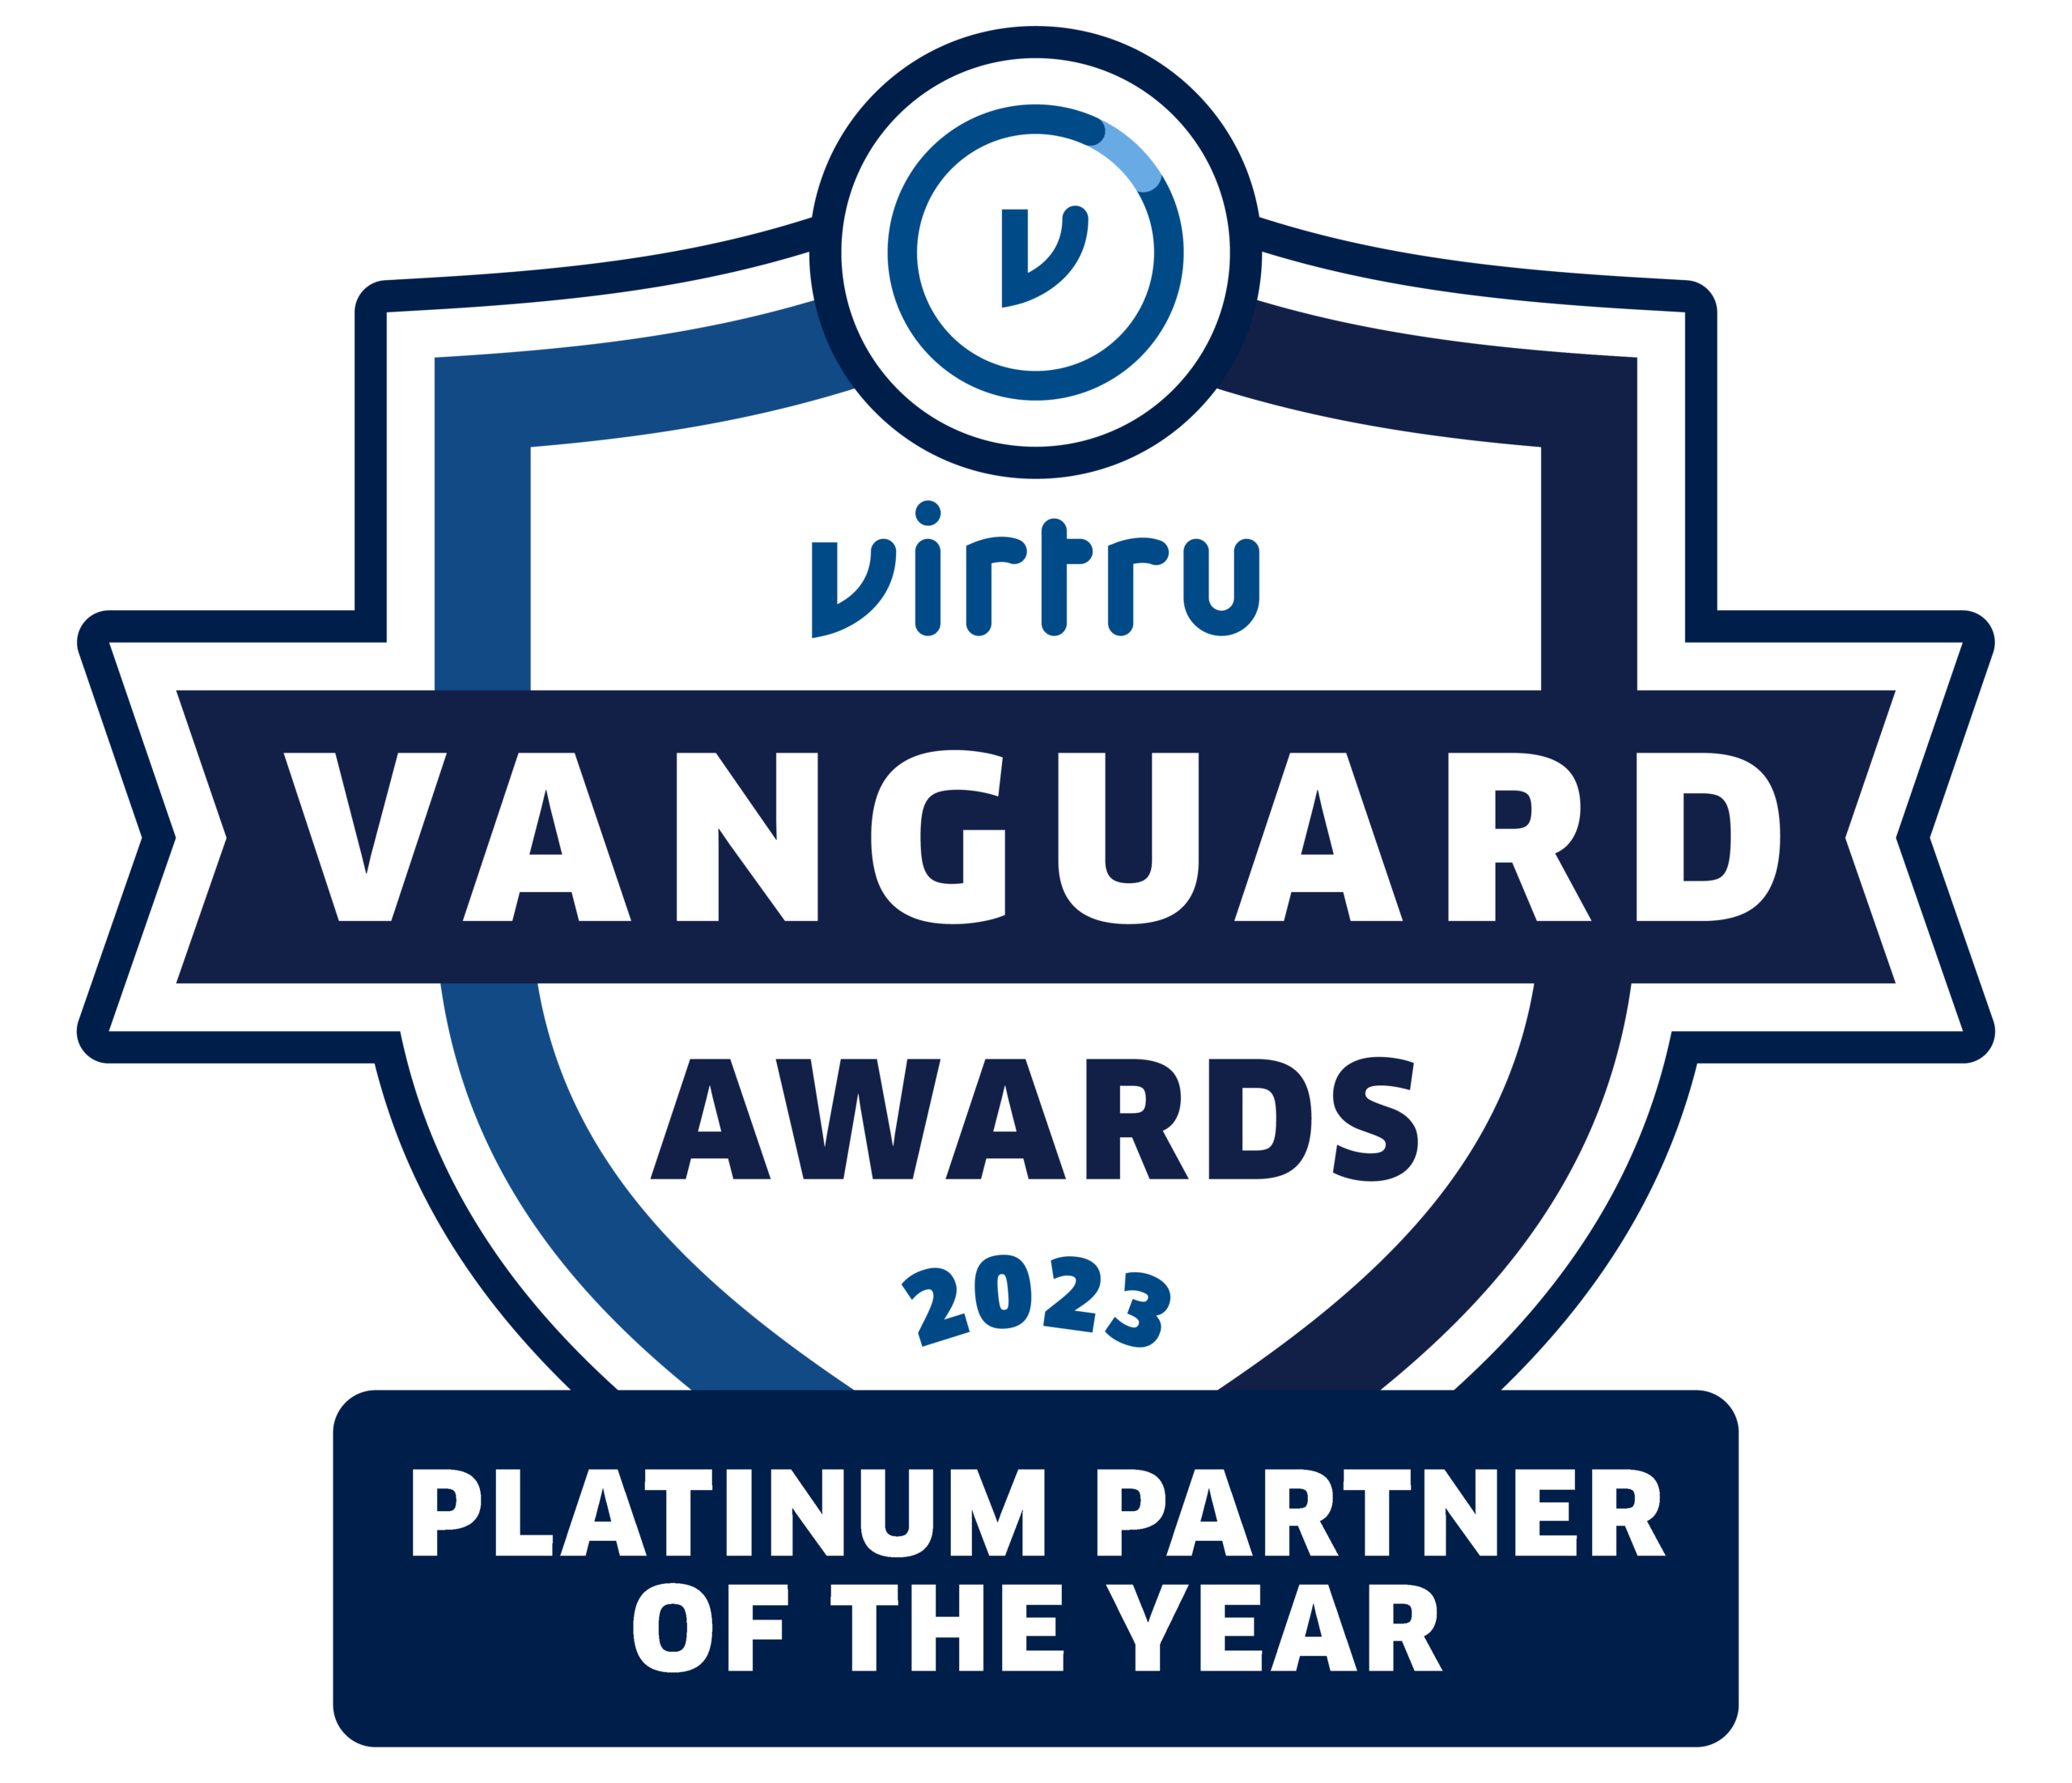 virtru vanguard awards 2023 platinum partner of the year